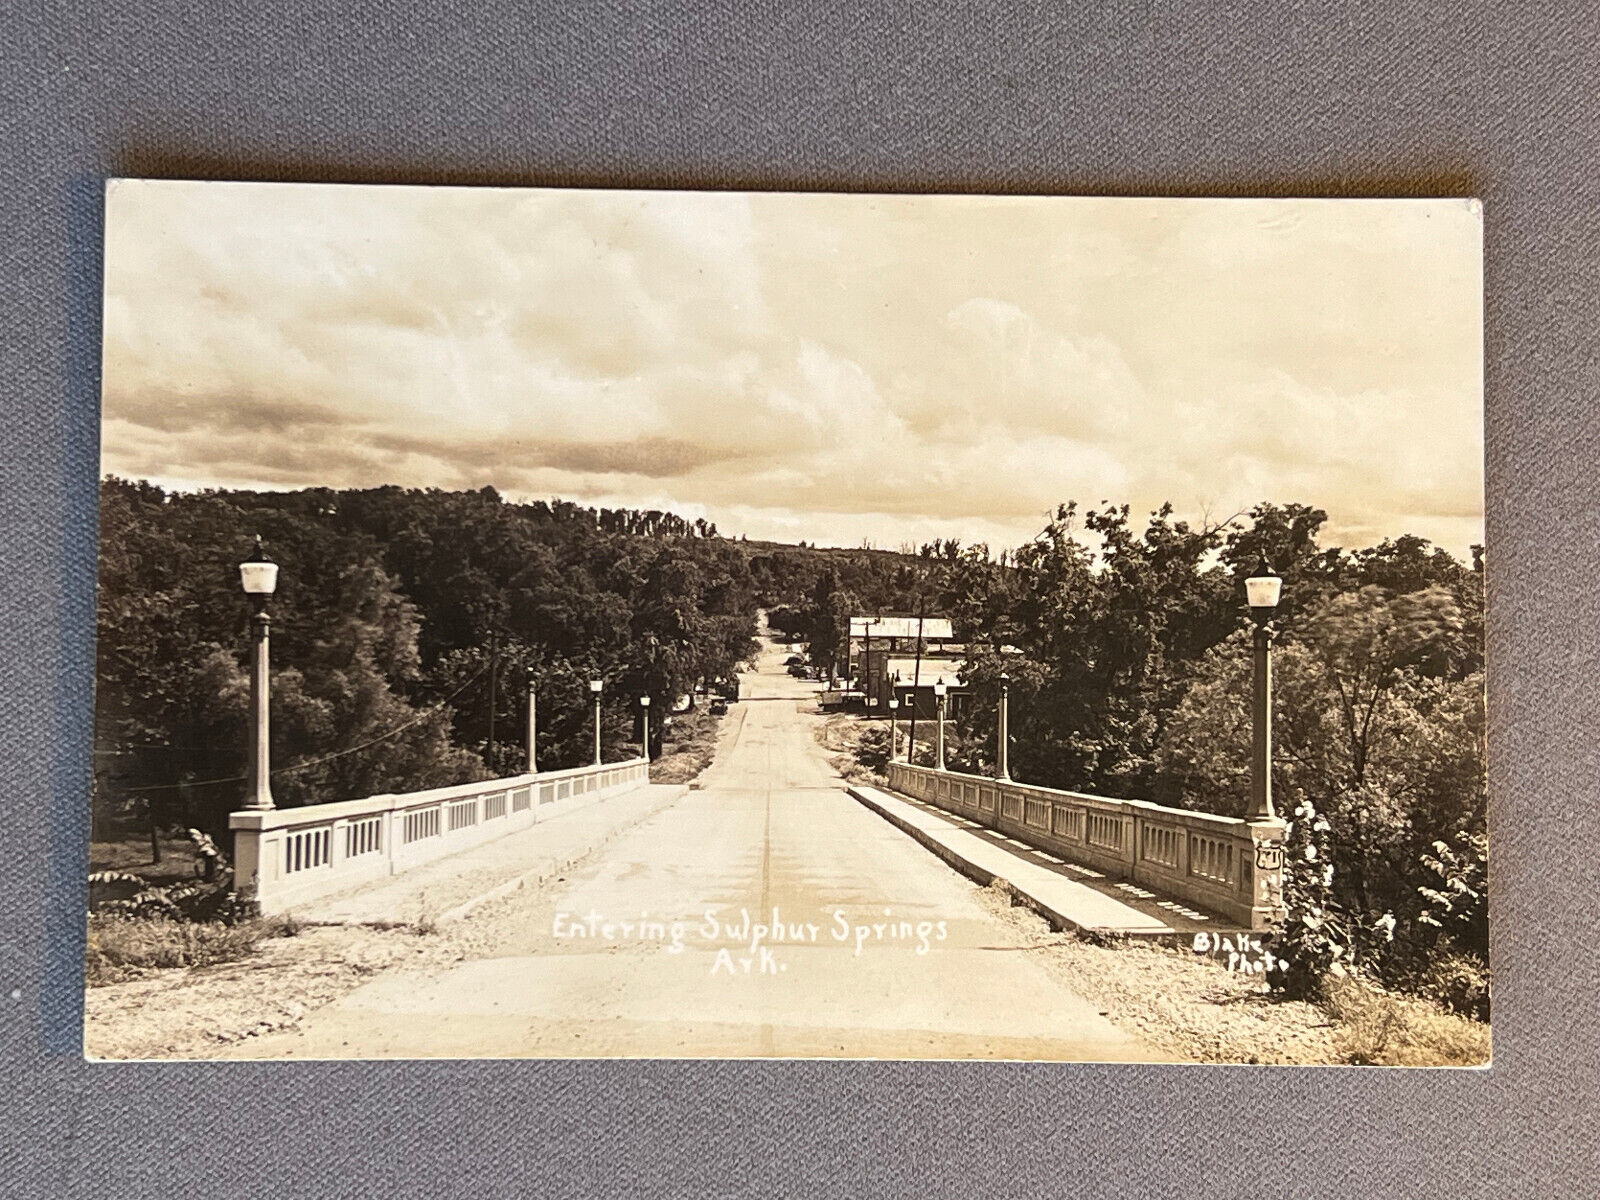 AR Arkansas RPPC, Entering Sulphur Springs Over Bridge, ca 1940